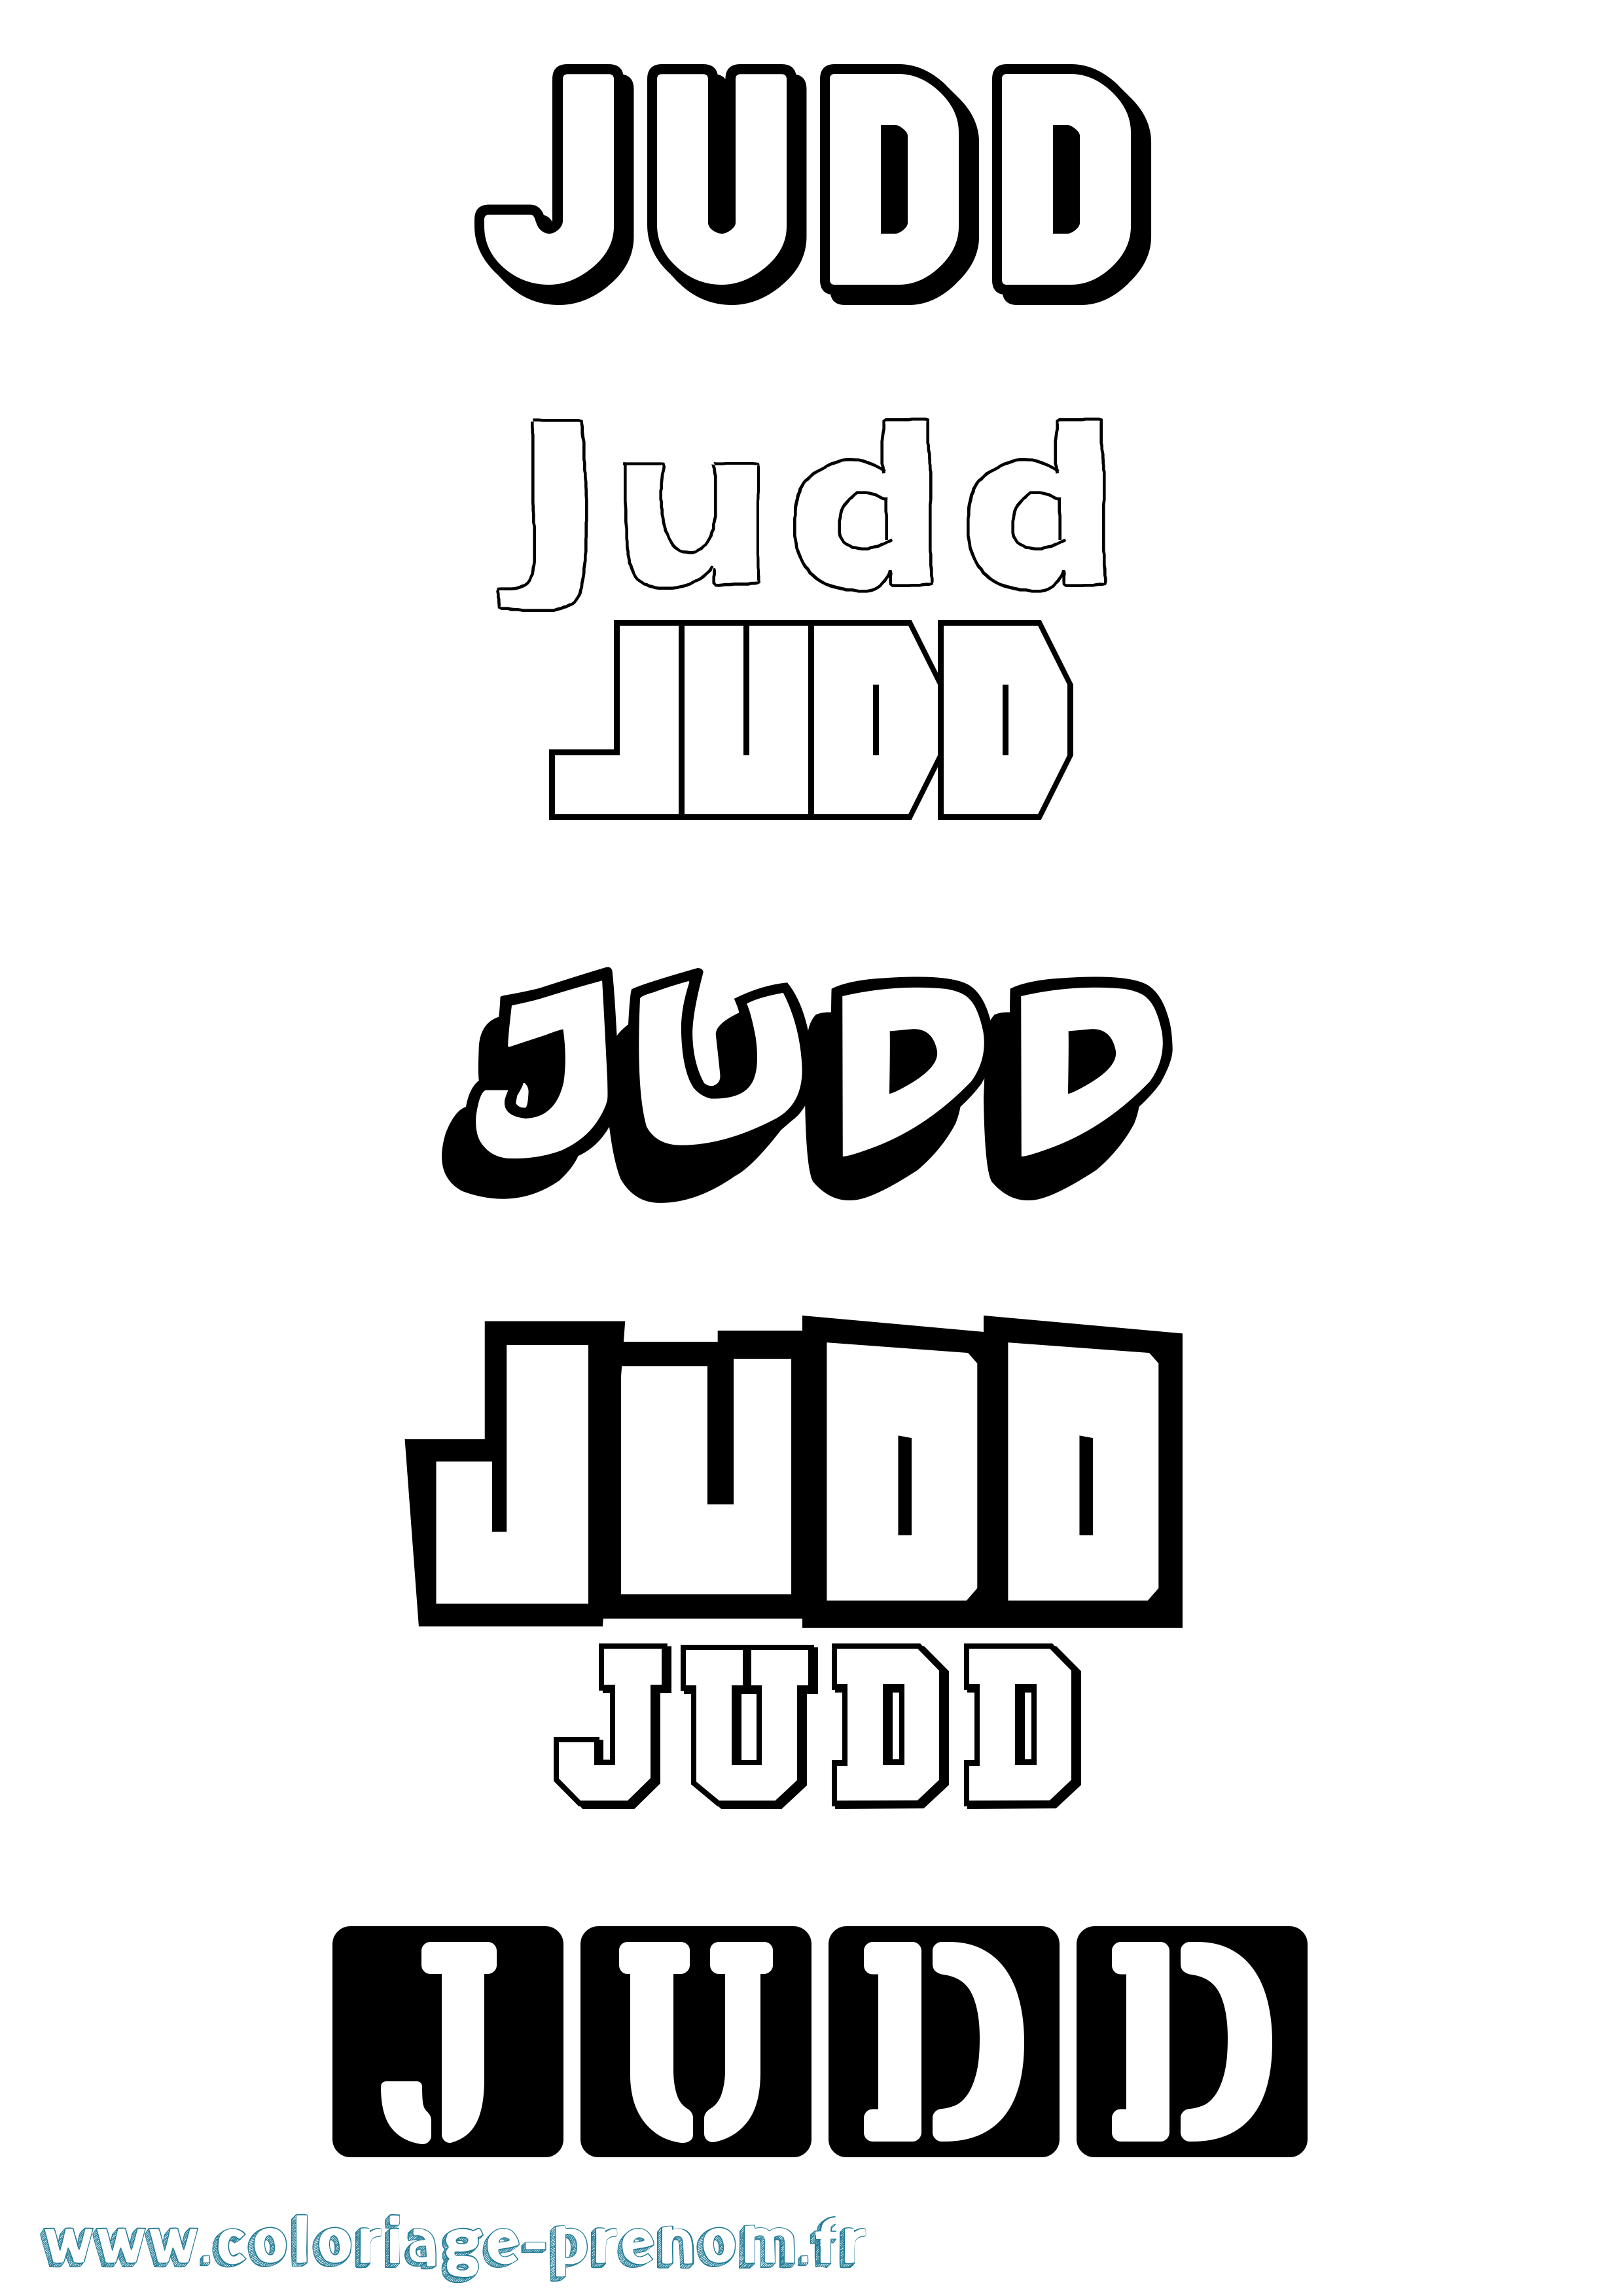 Coloriage prénom Judd Simple